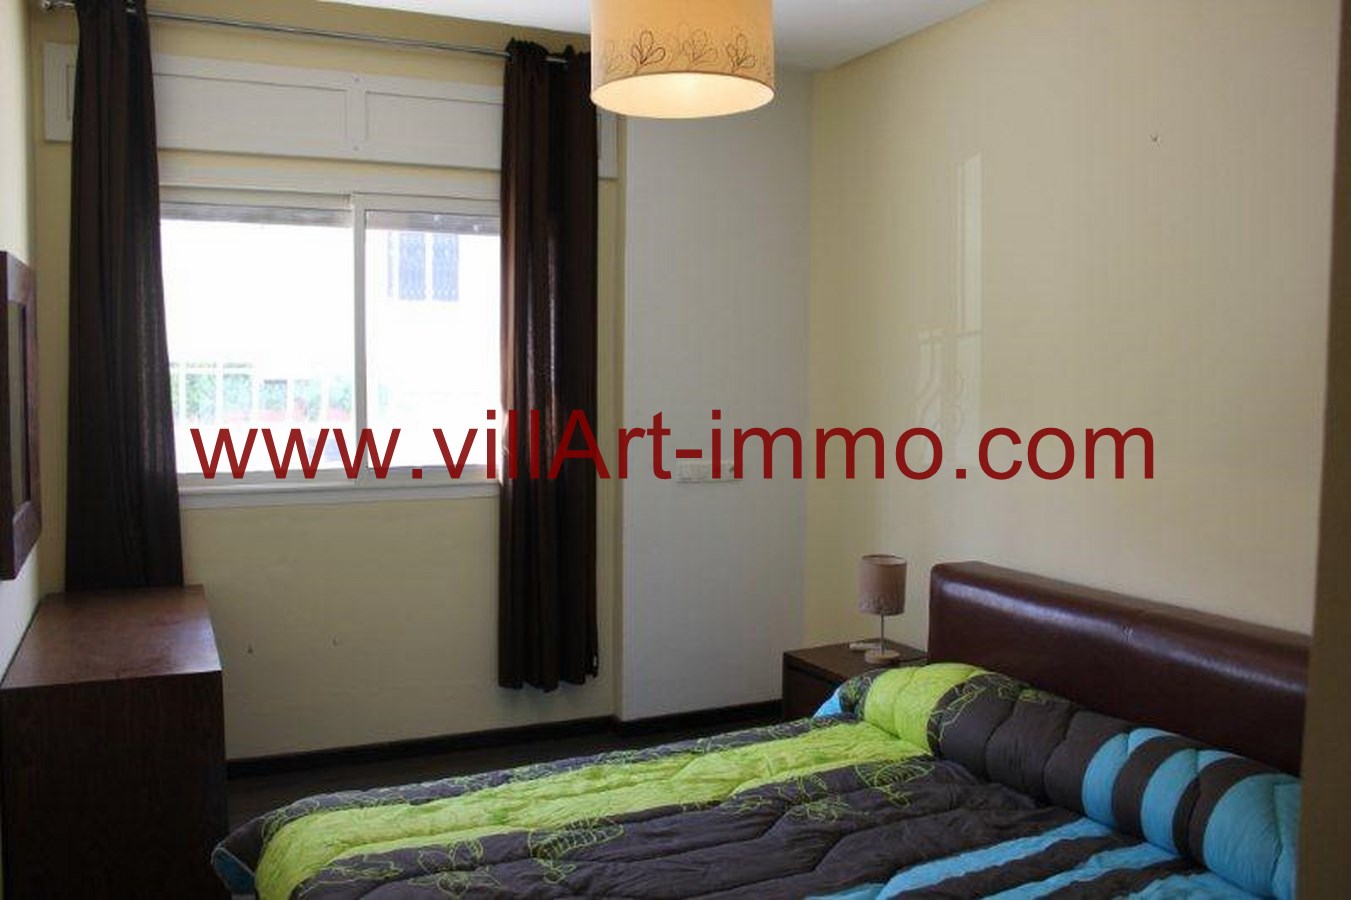 7-Location-Appartement-Meublé-Tanger-Chambre 2-L720-Villart immo